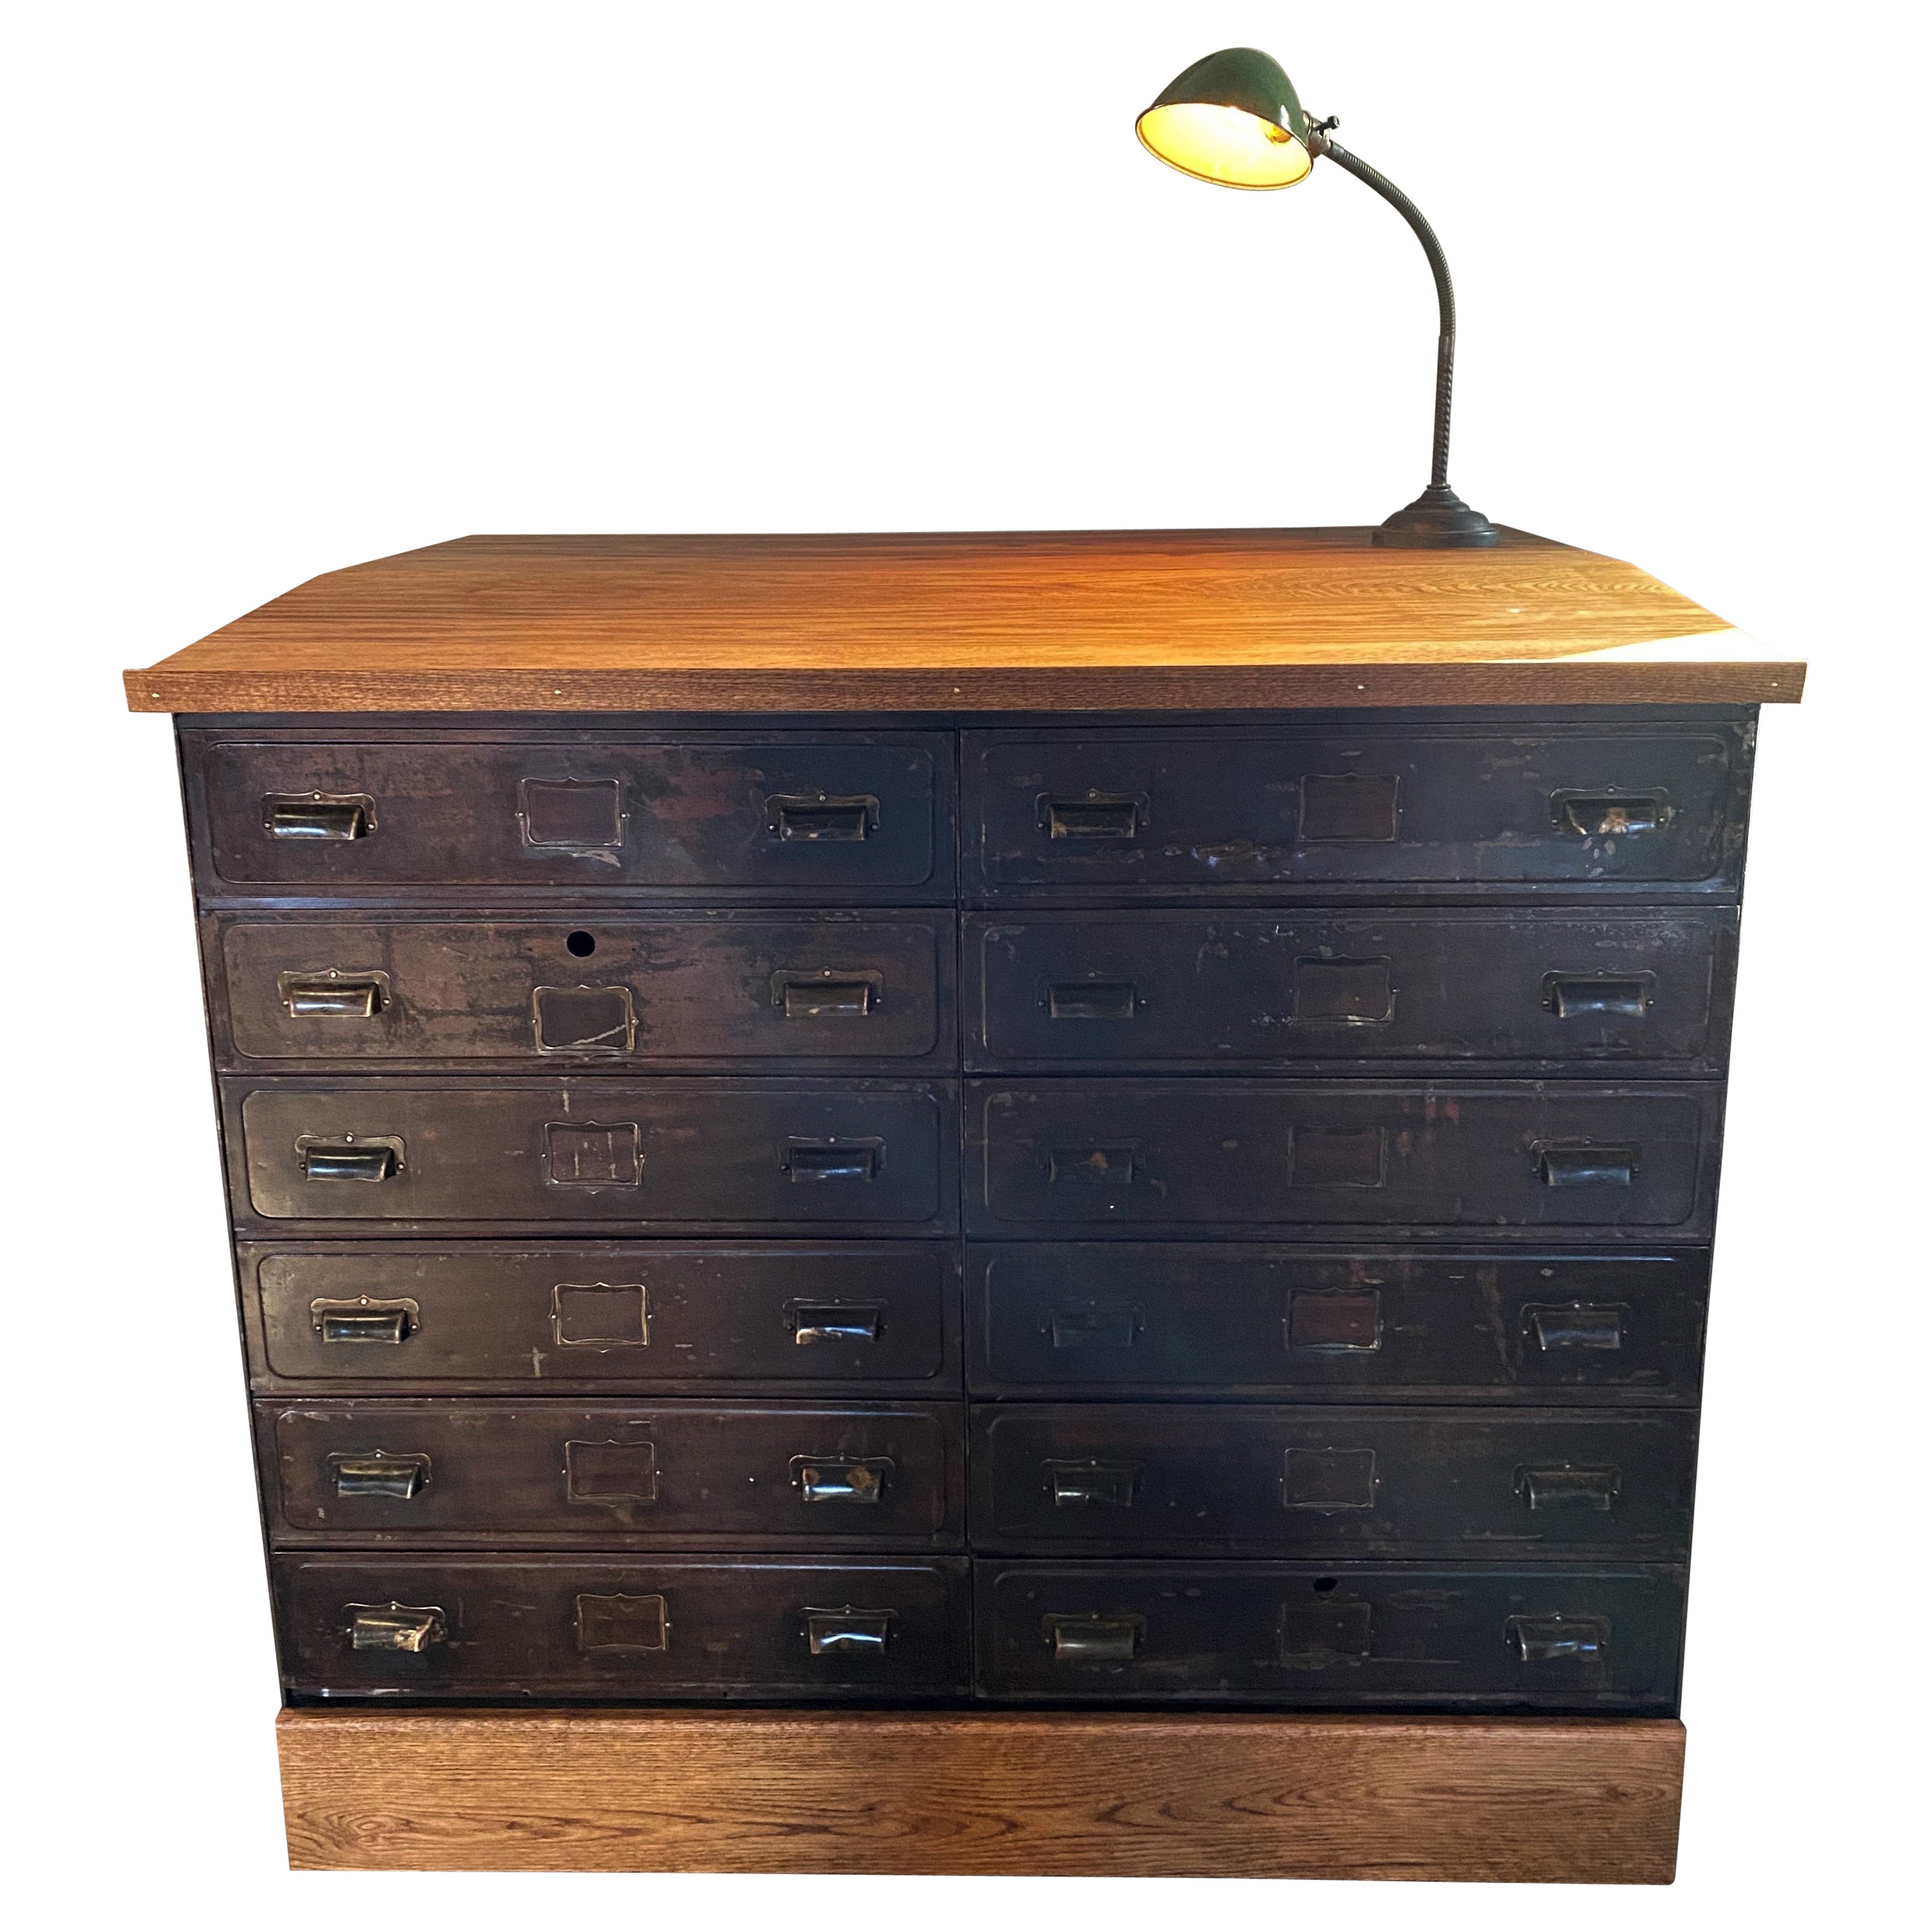 Vintage Industrial Slant Top Cabinet with Task Lamp